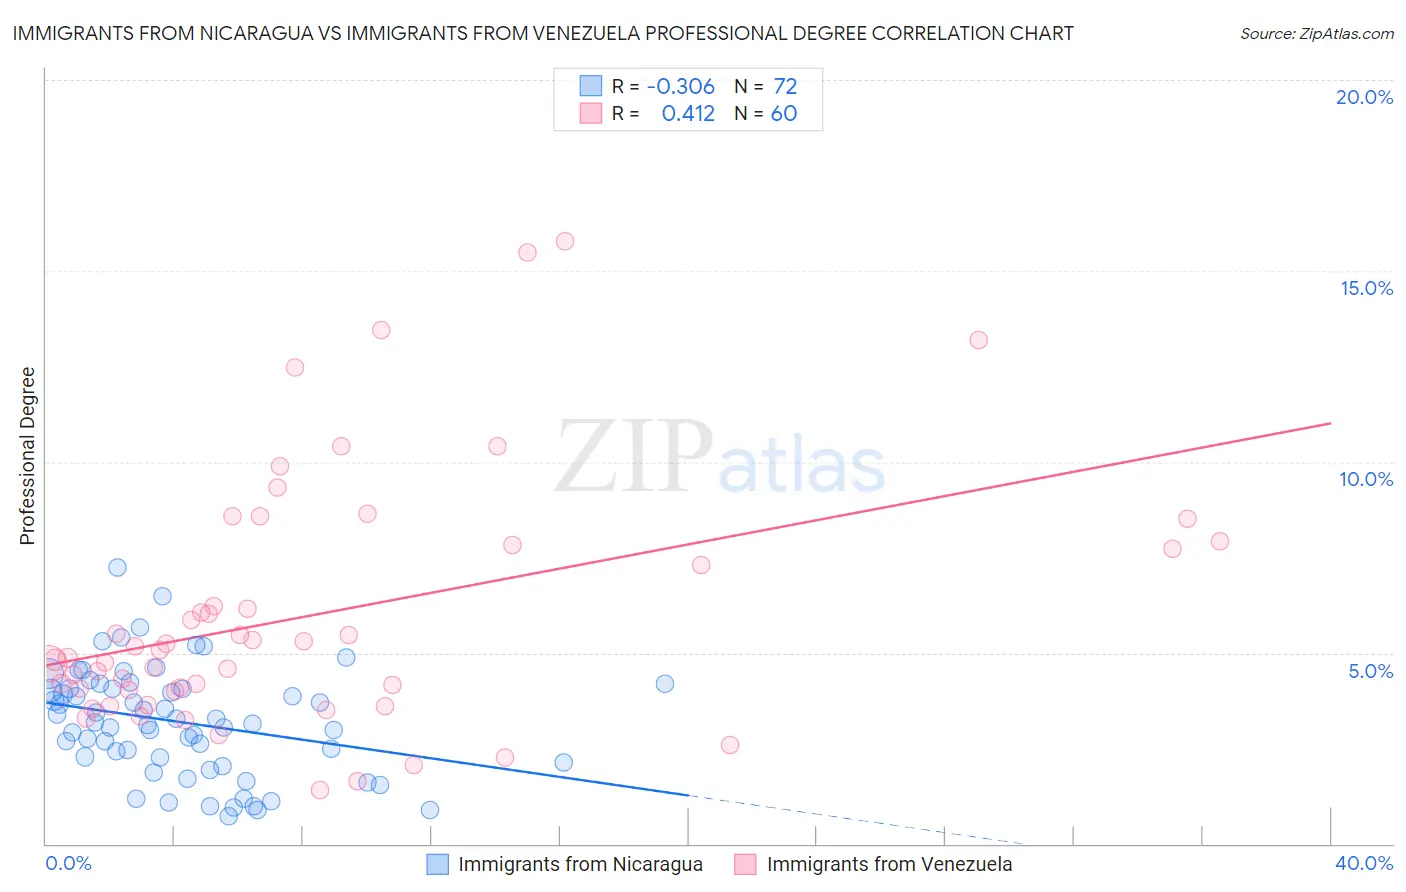 Immigrants from Nicaragua vs Immigrants from Venezuela Professional Degree